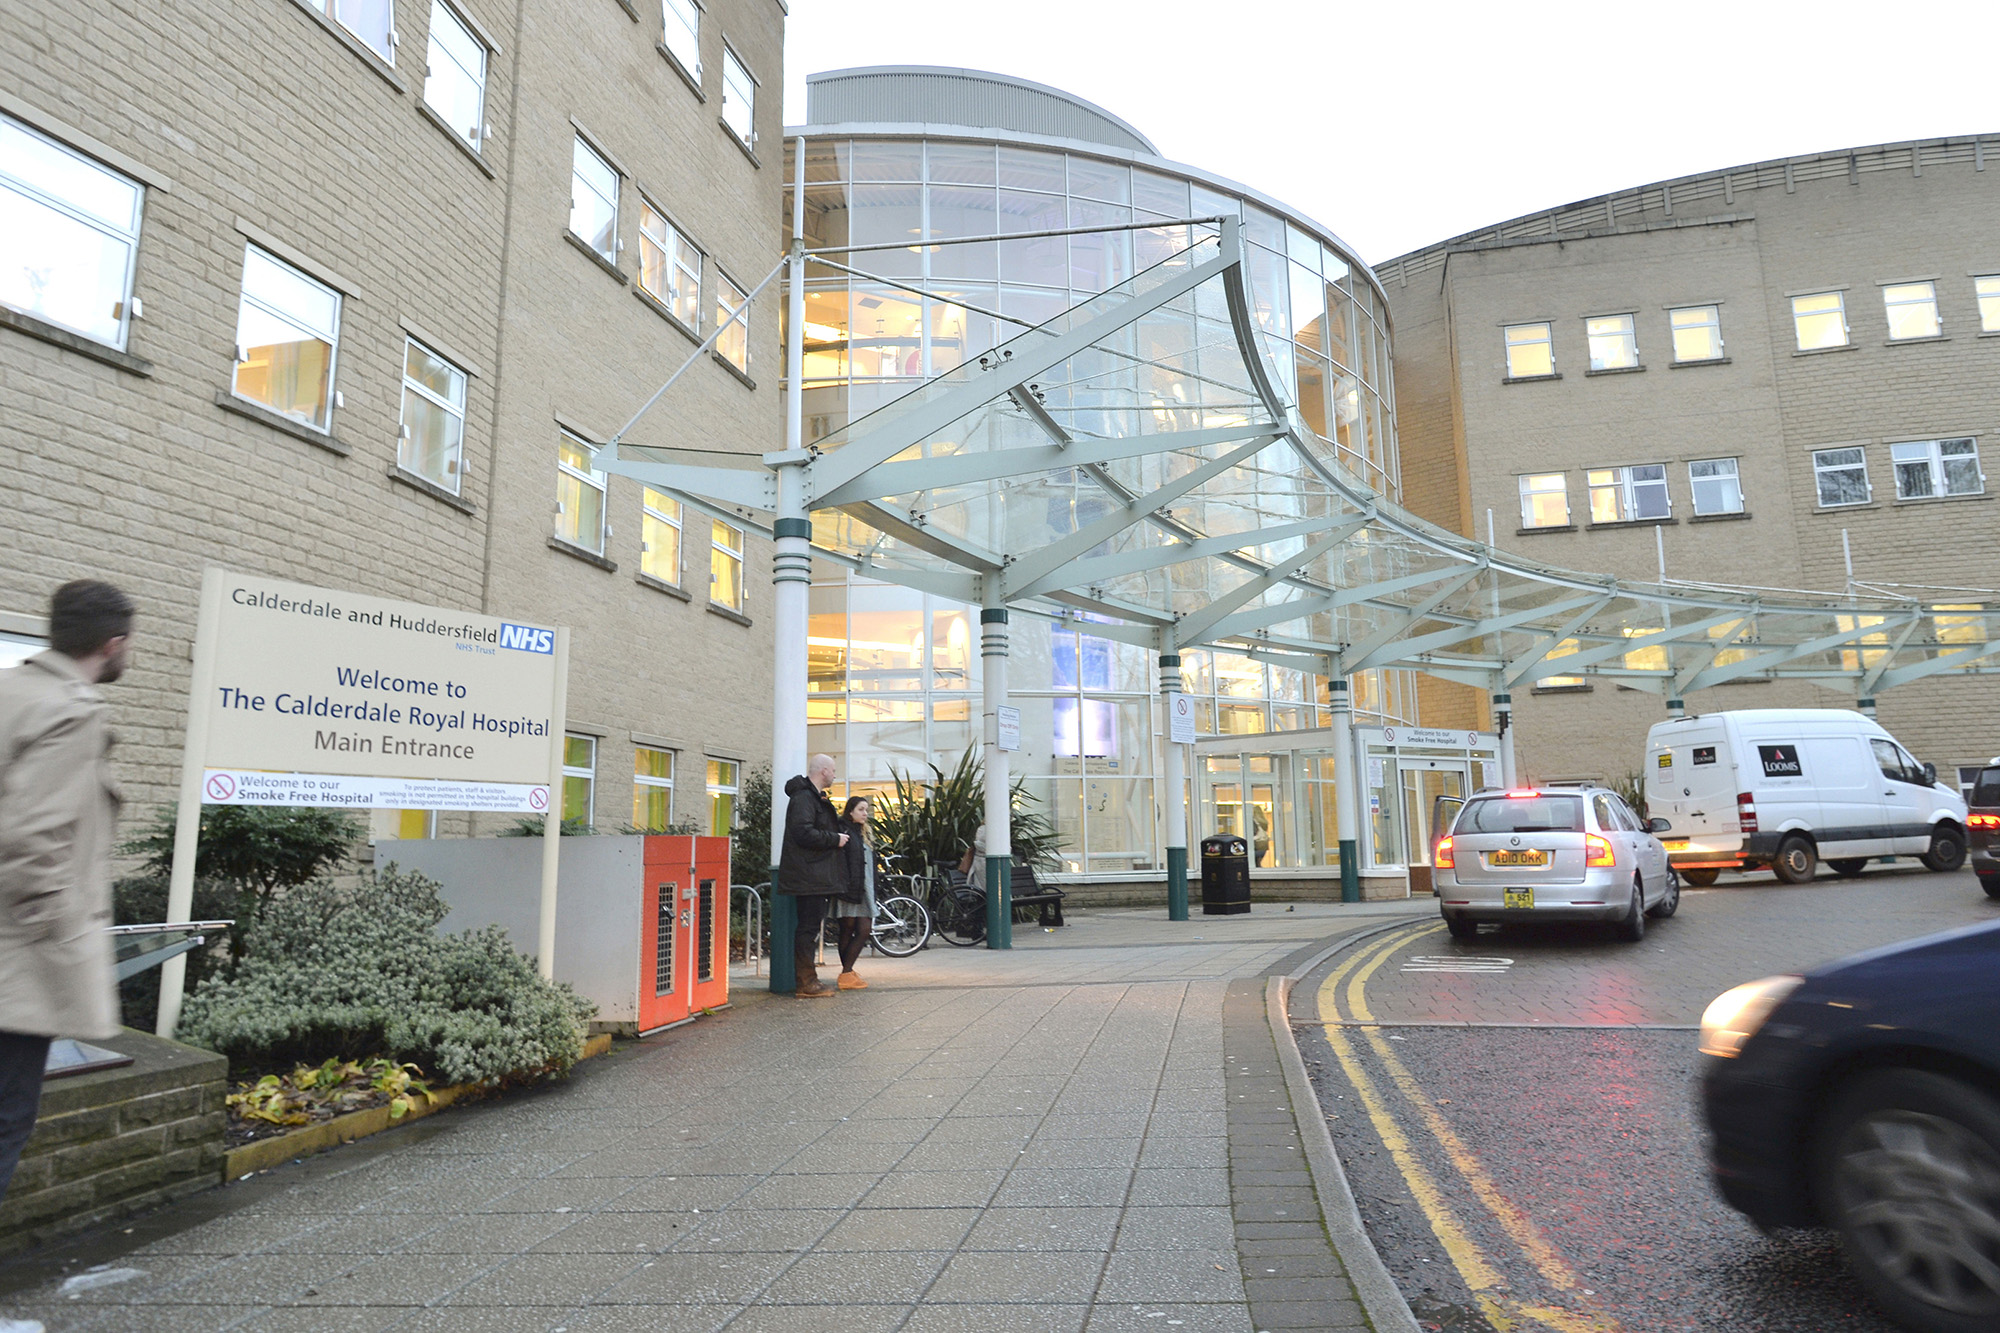 Calderdale Royal Hospital - Main Entrance 